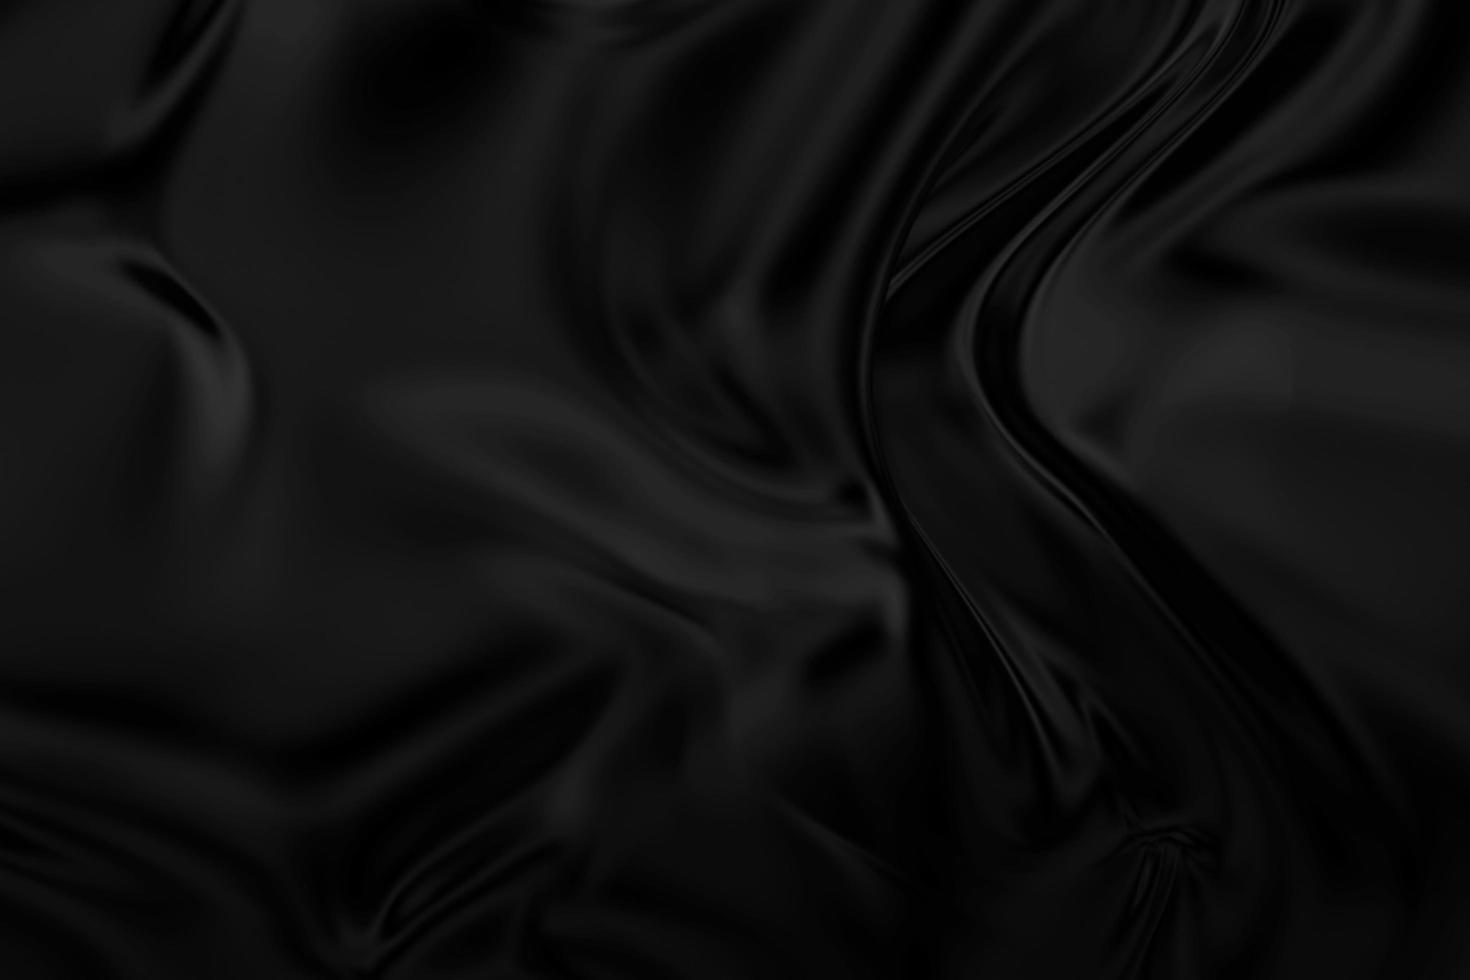 noir en tissu texture recouvrir élément photo